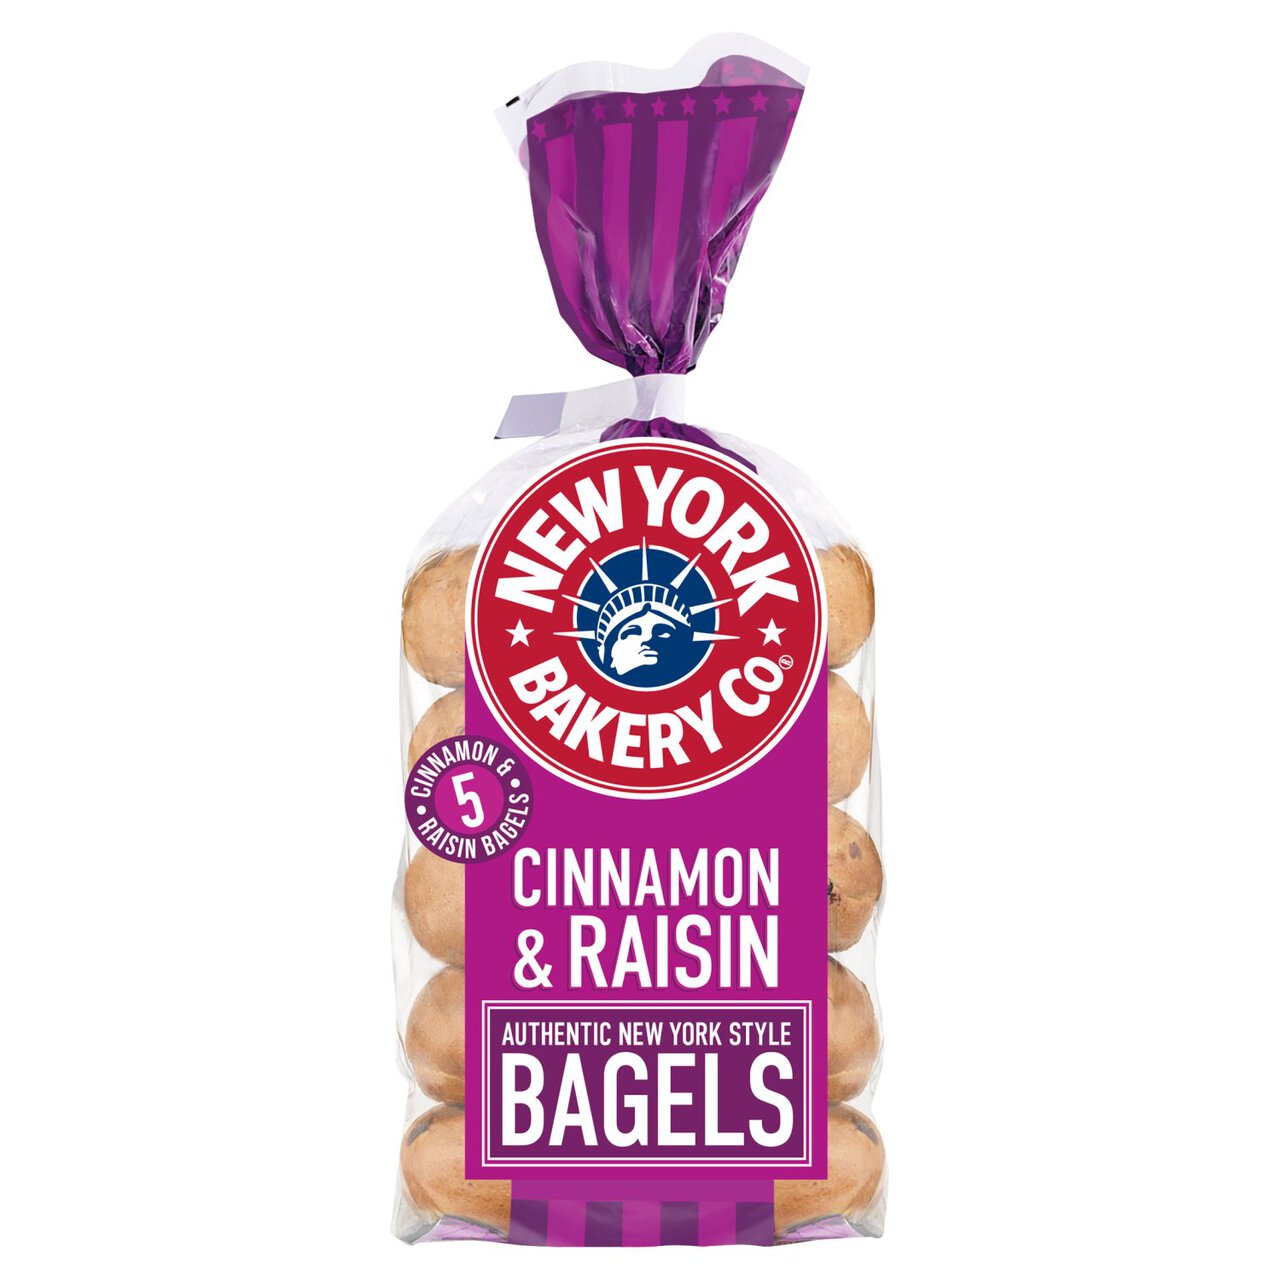 New York Bakery Co. Cinnamon & Raisin Bagels 5 per pack